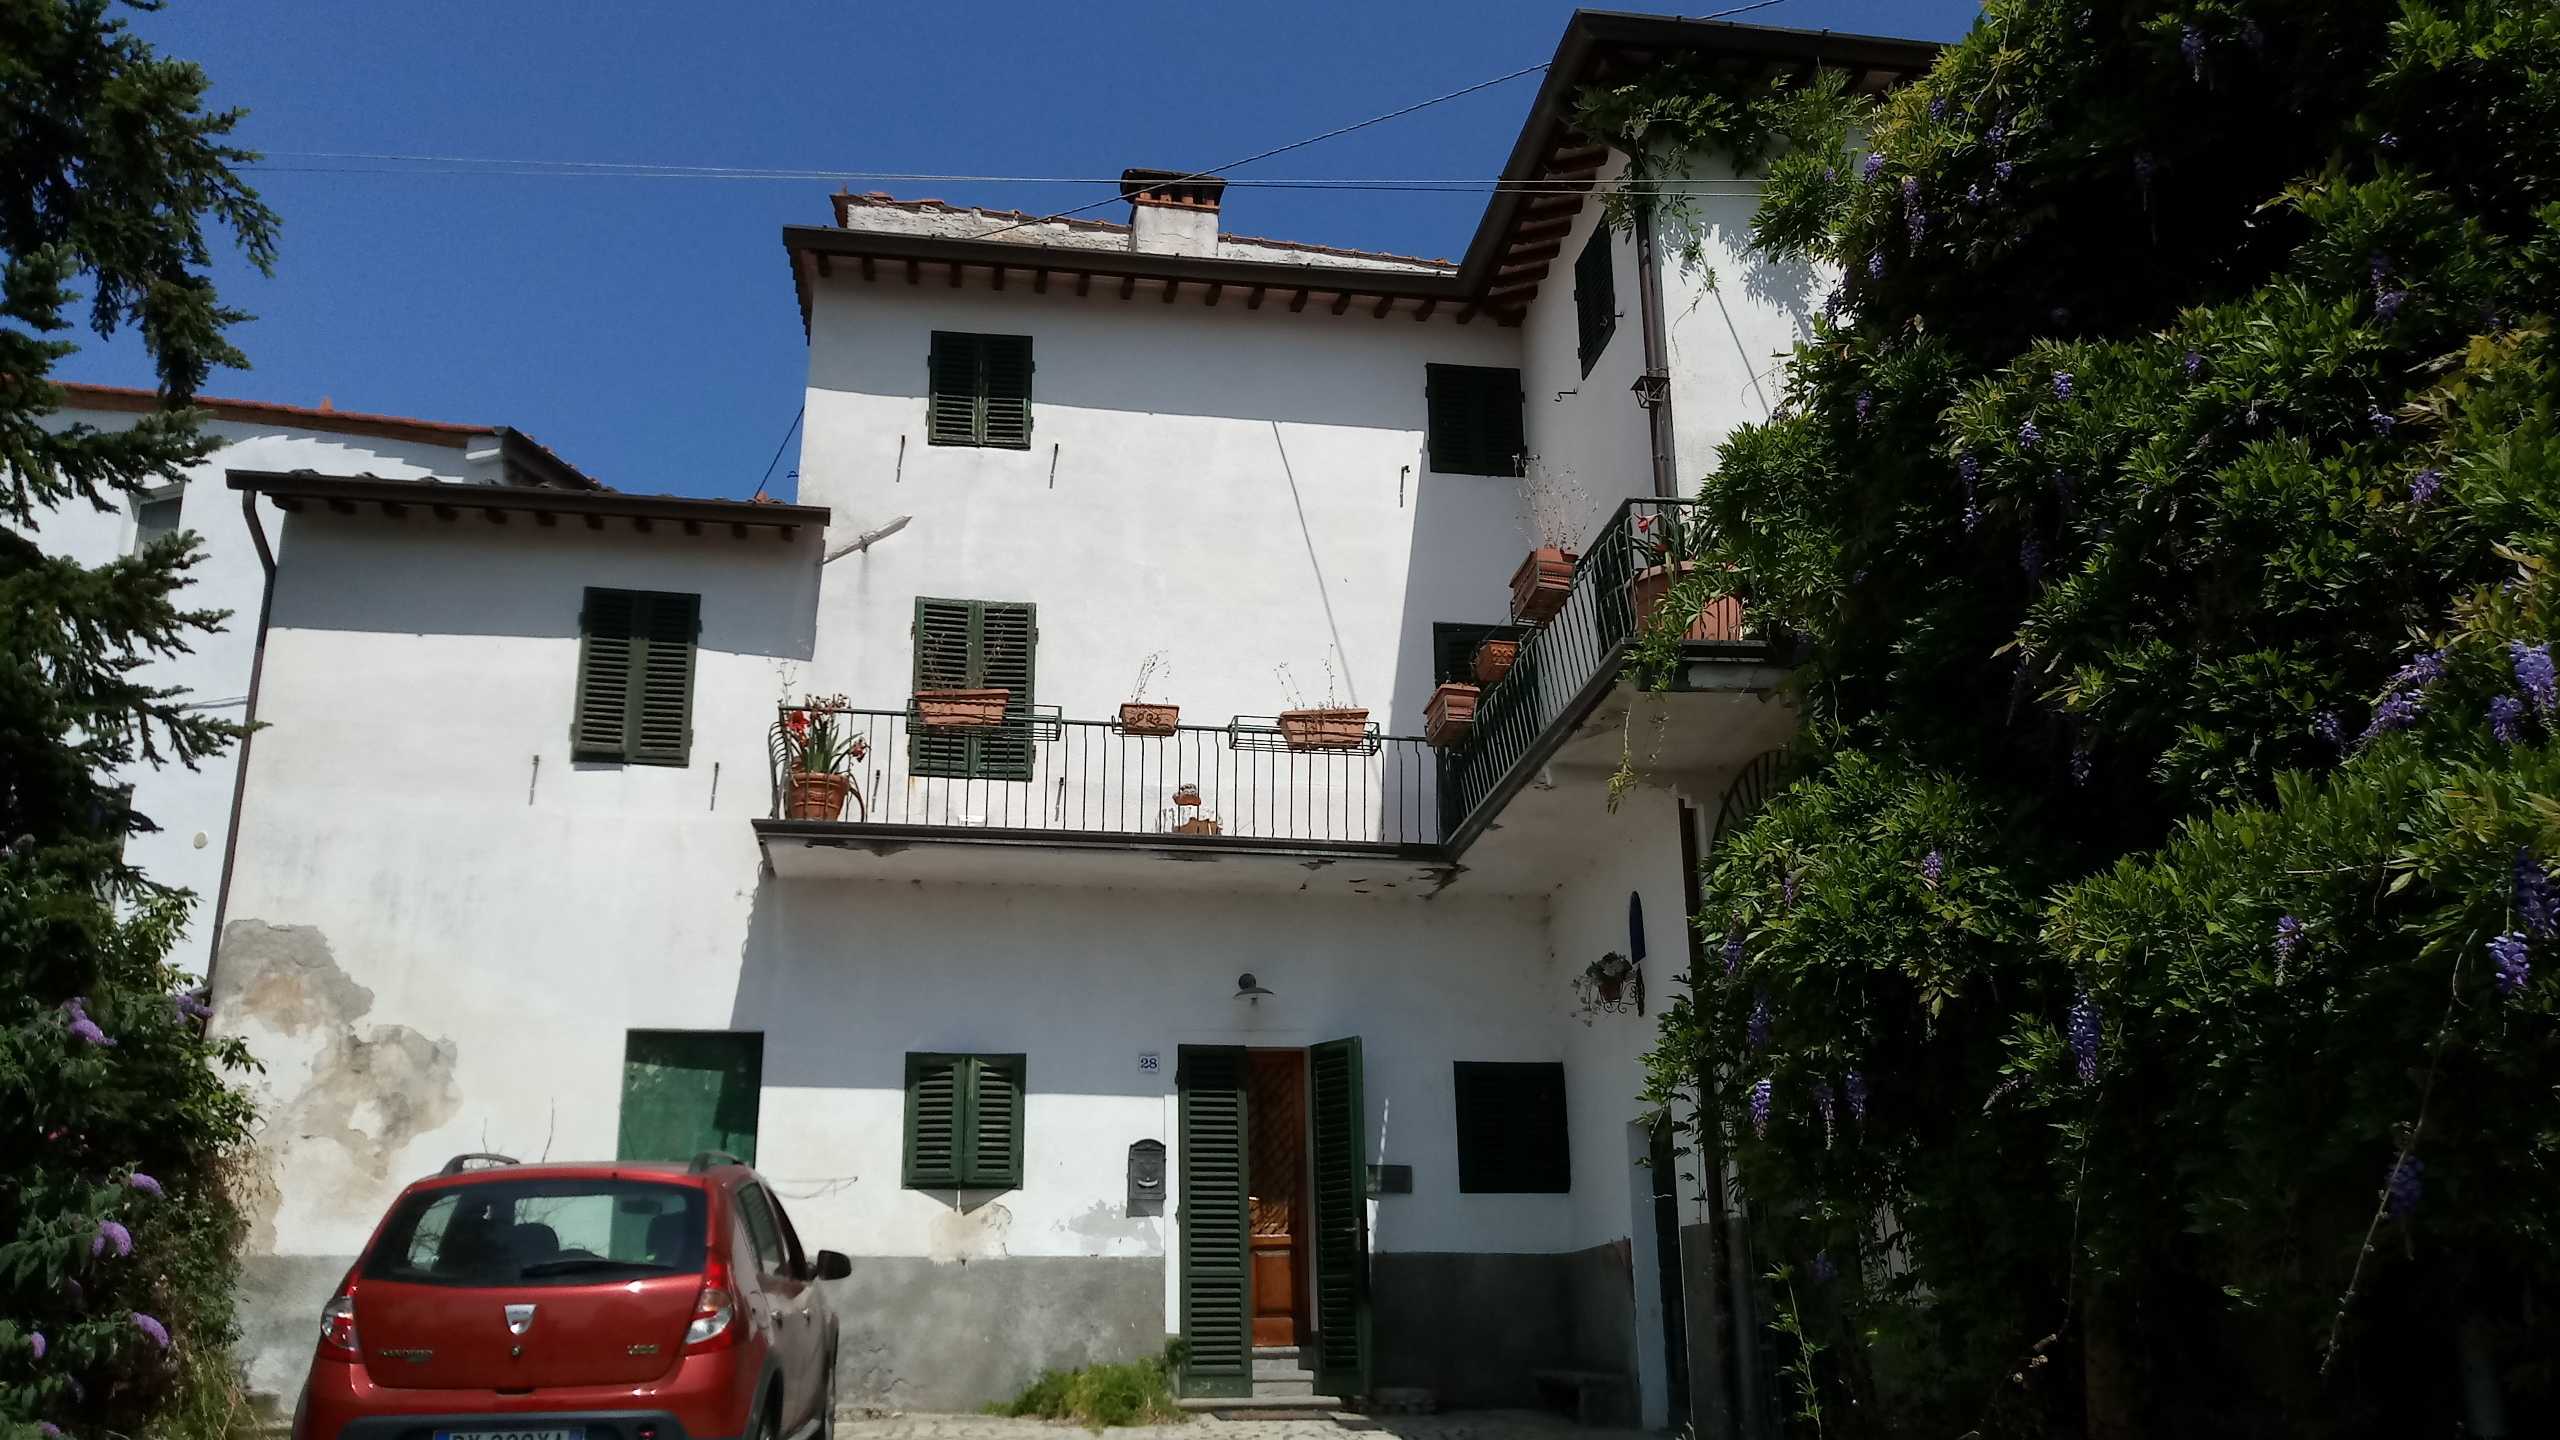 Porzione di casa in Vendita a Lucca via di matraia